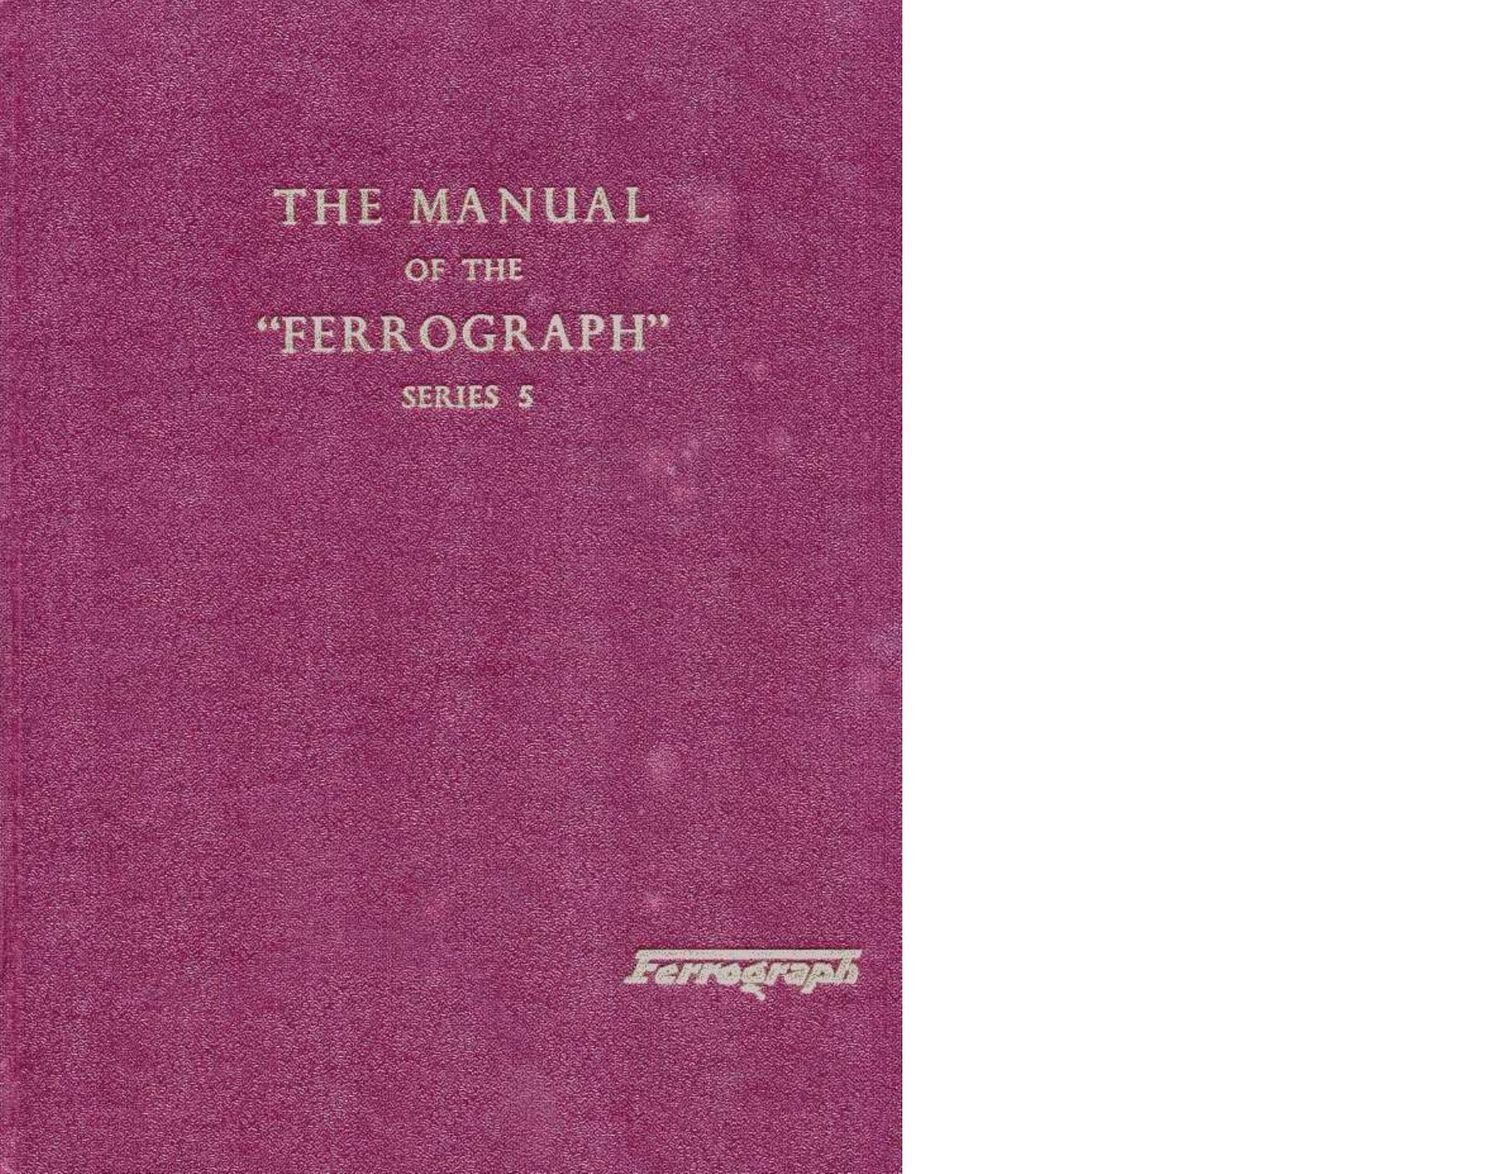 Ferrograph 5 Owners Manual